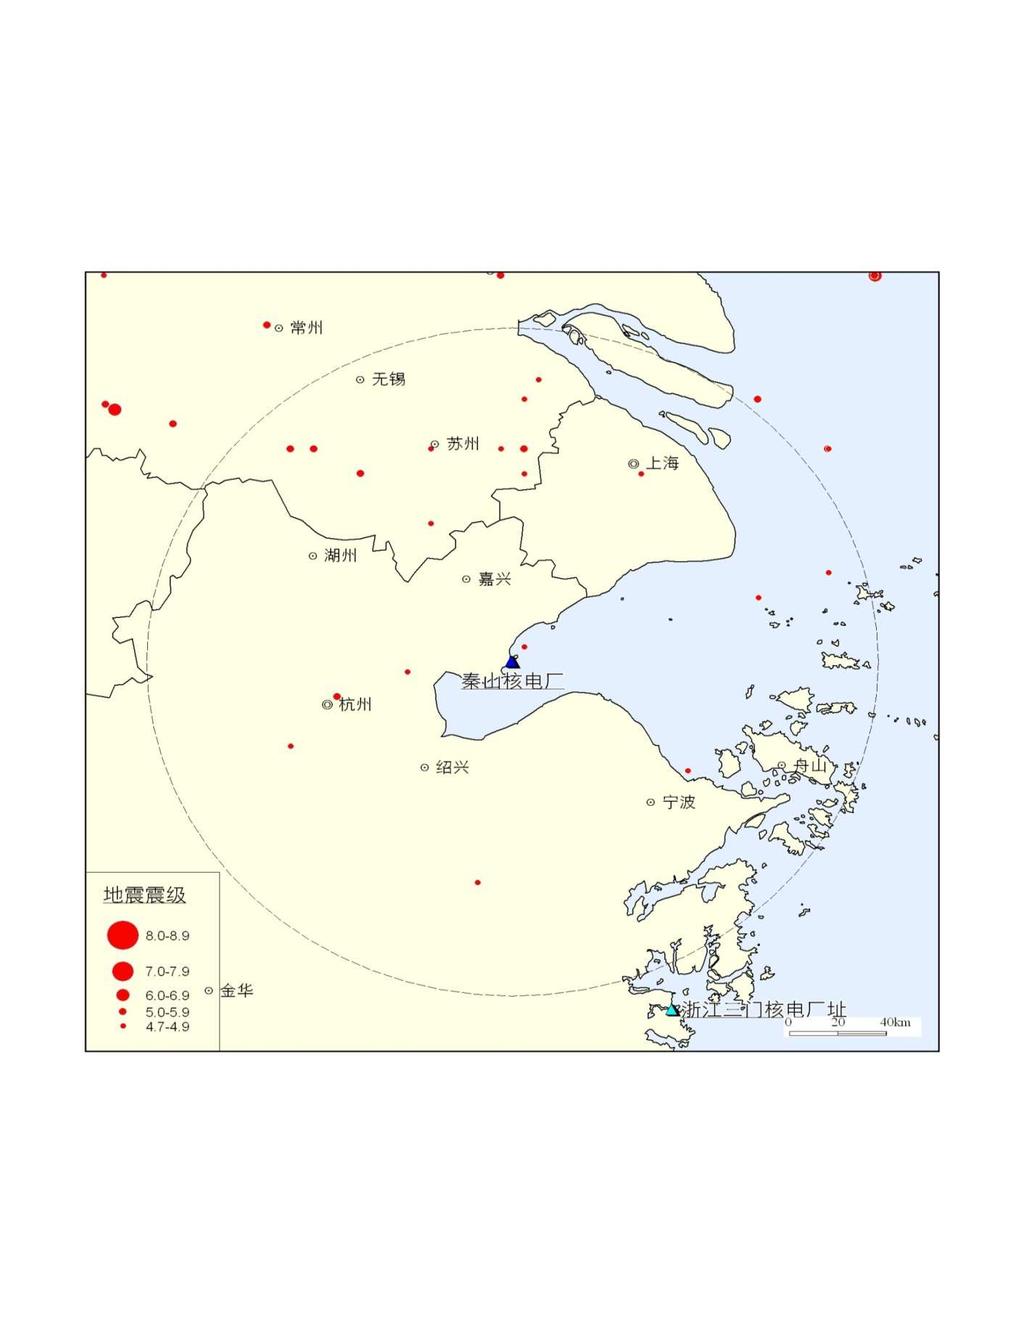 Fig.3-4 Seismic background of Qinshan